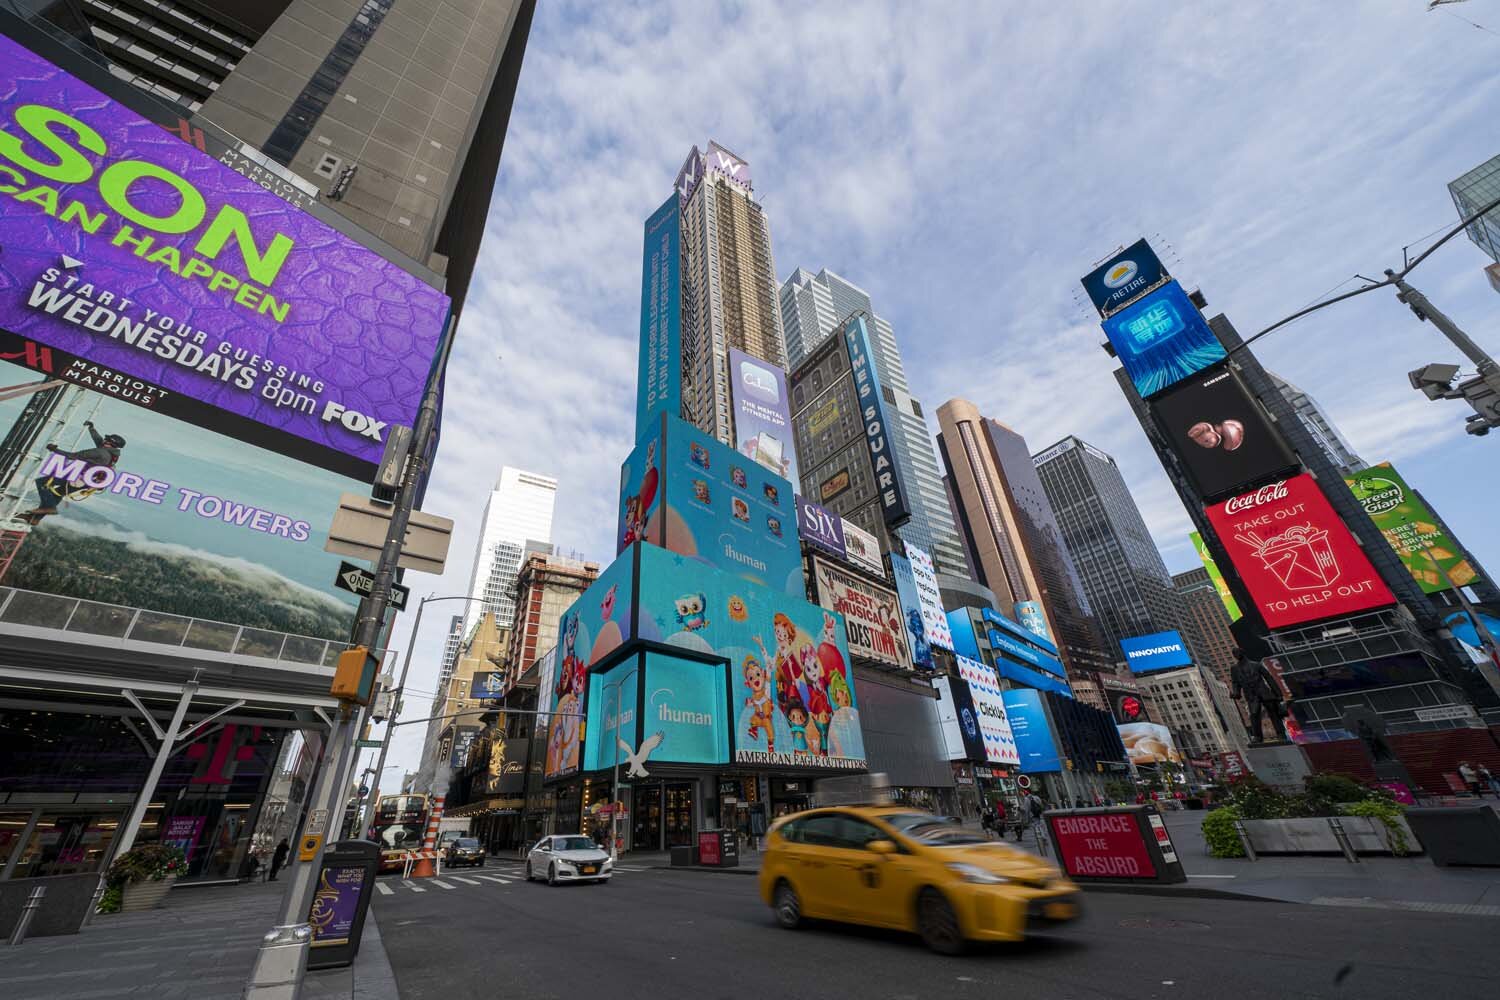 bunke kobber mestre NYSE IPO billboard in Times Square NYC — BEN HIDER